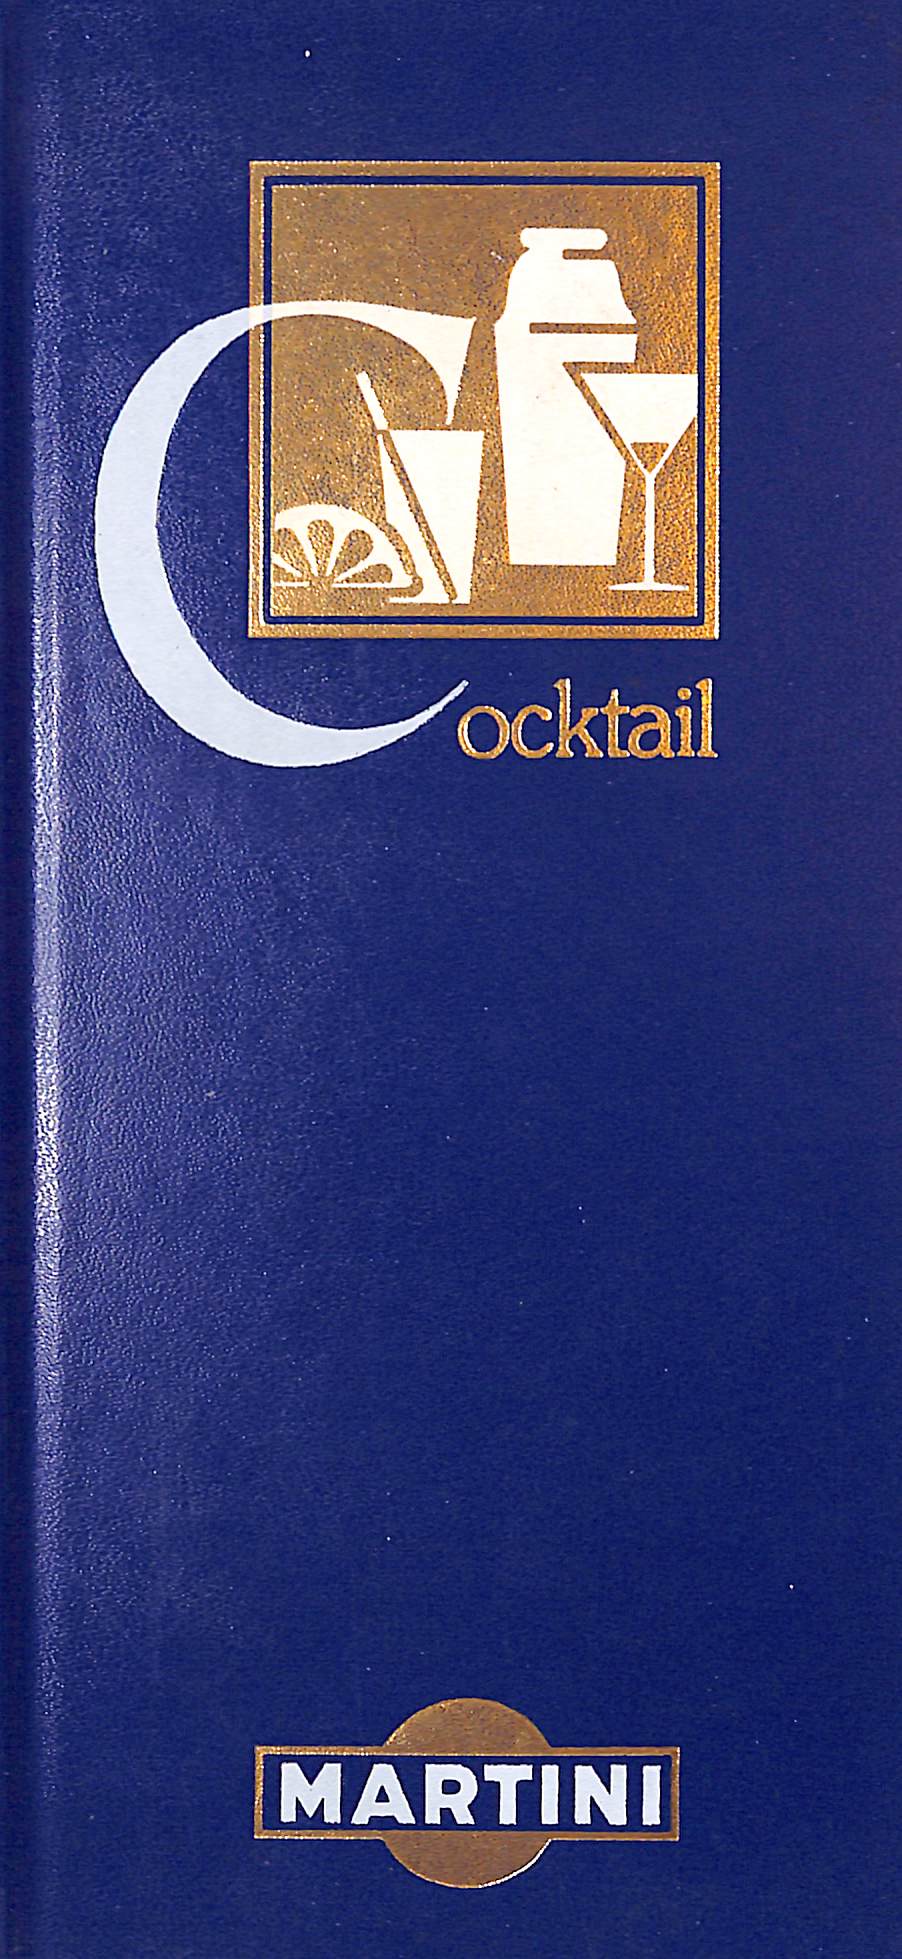 "Cocktail" 1990 GIANOLI, Giorgio